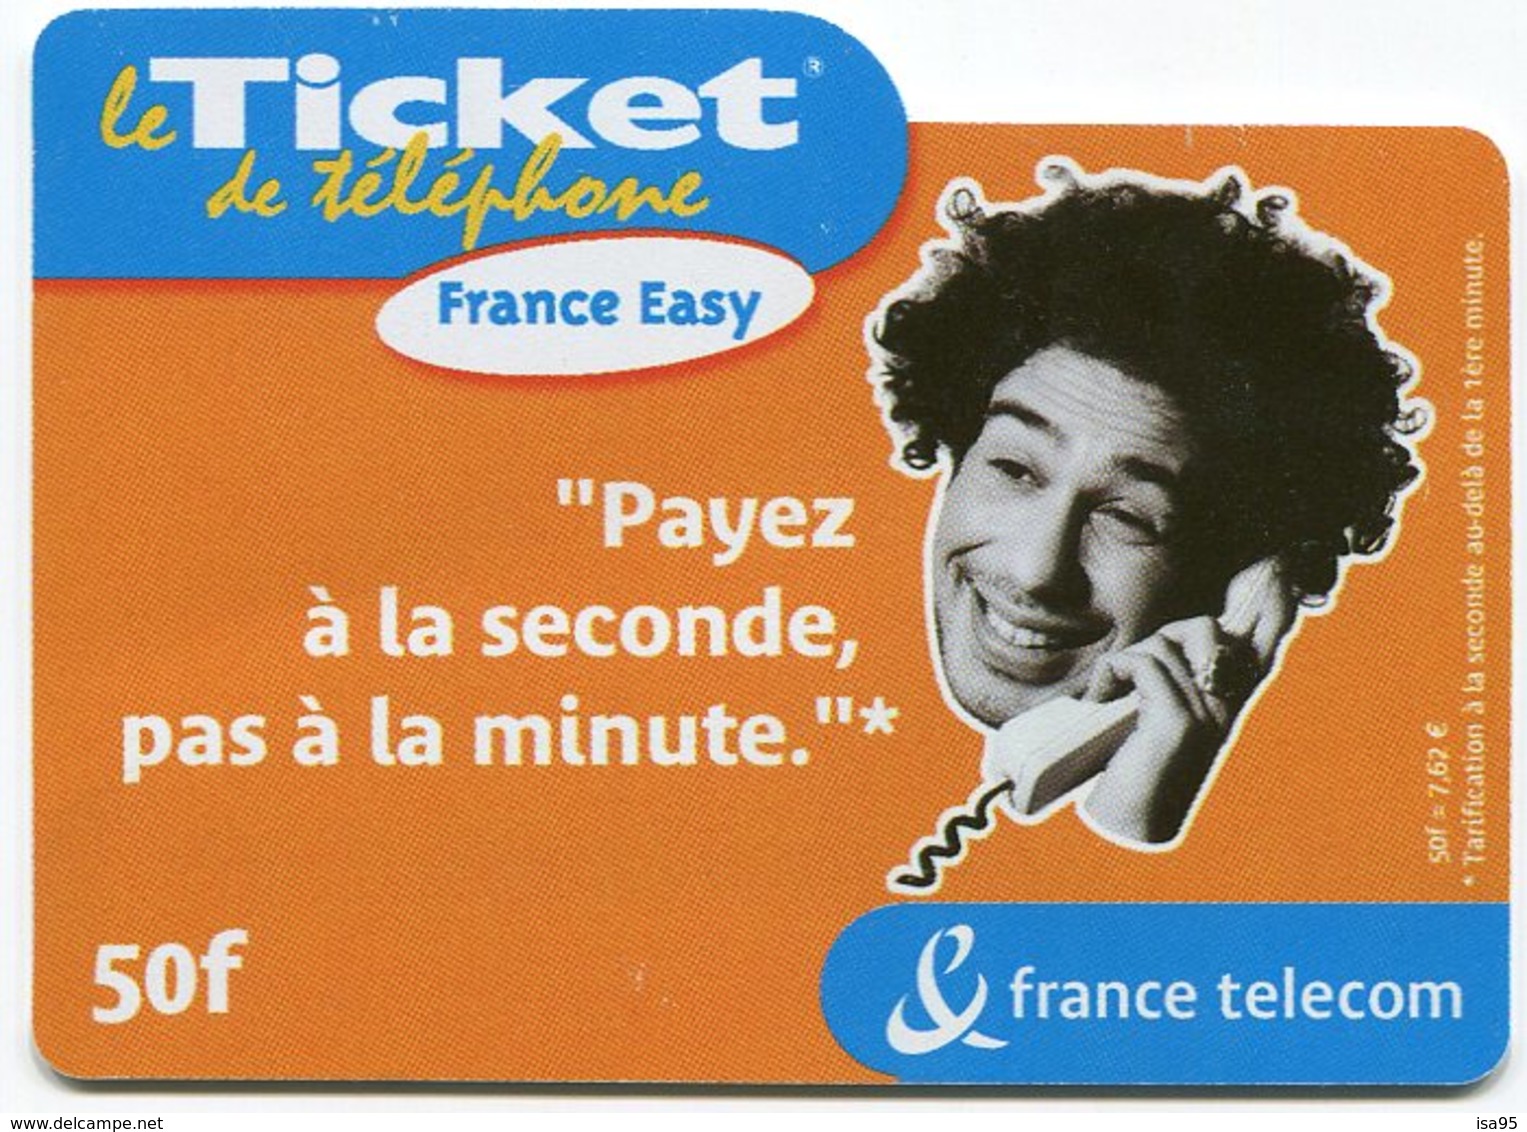 TELECARTE-LE TICKET DE TELEPHONE FRANCE EASY-2003-50F - FT Tickets